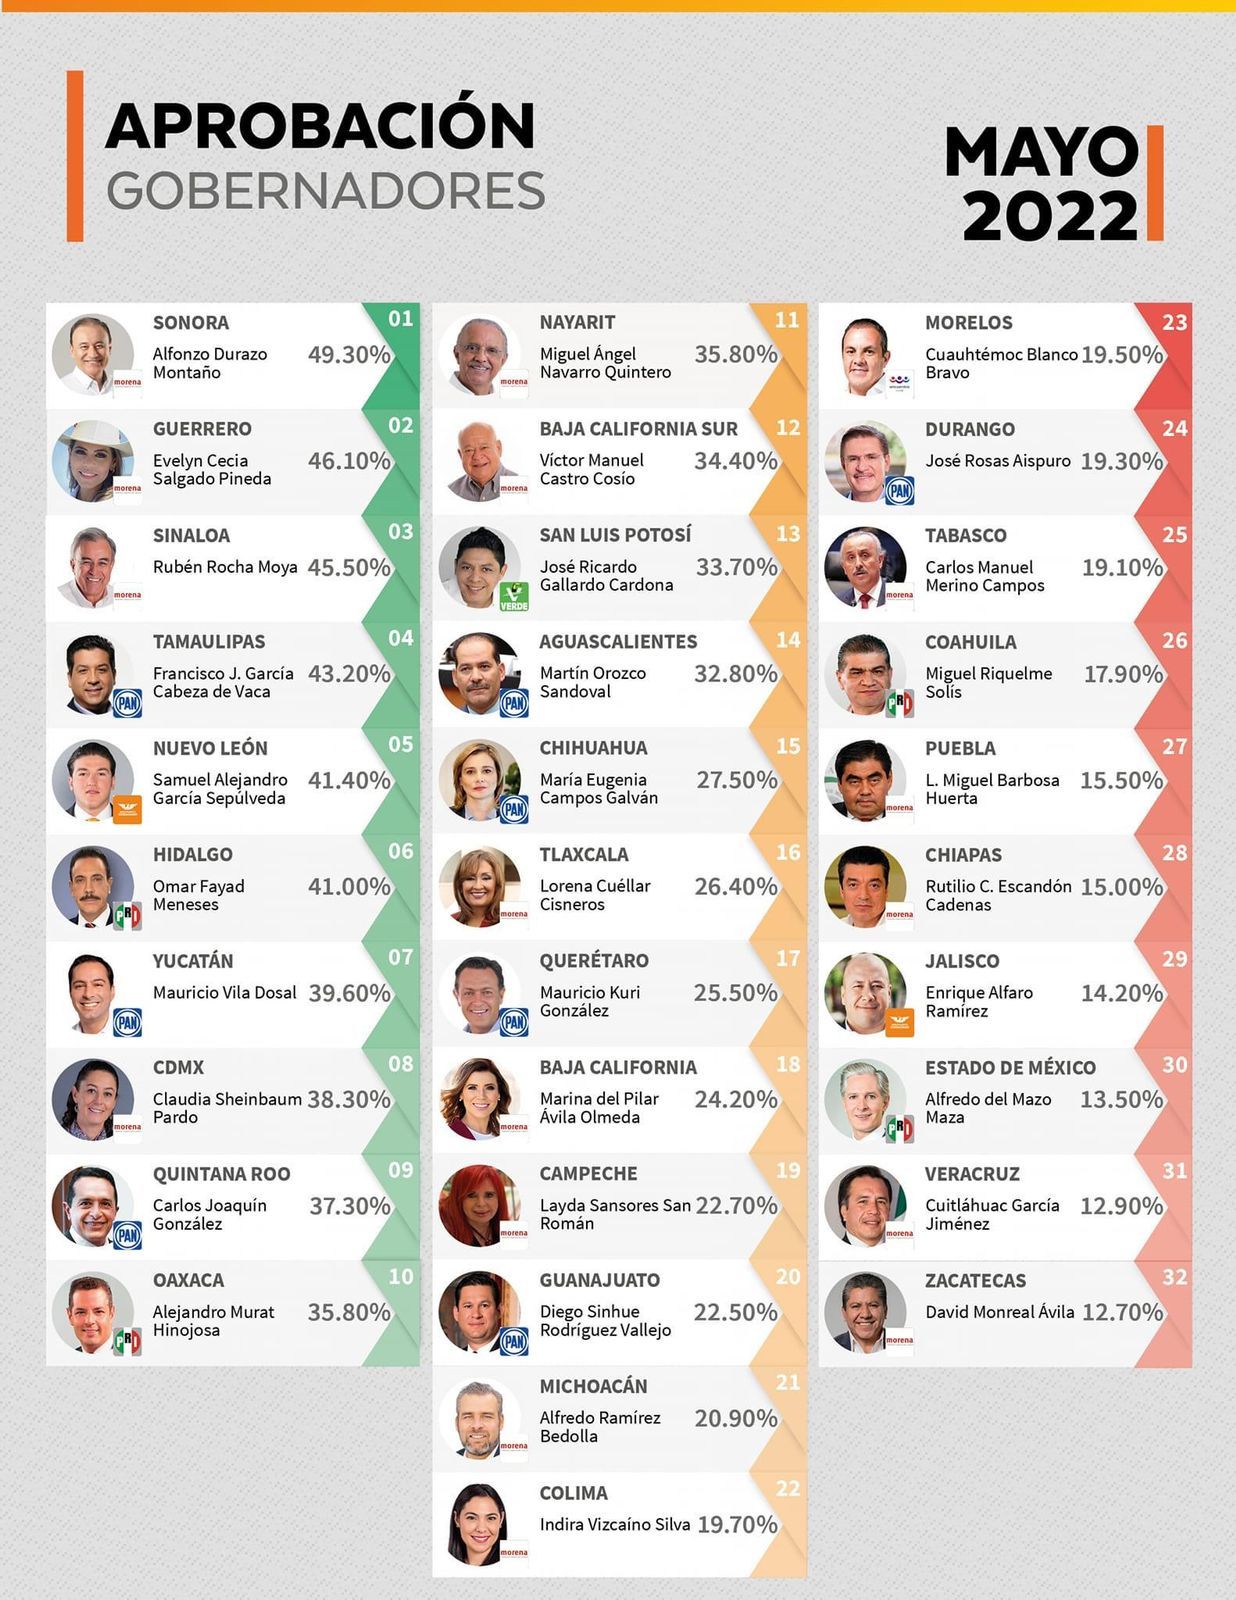 Evelyn Salgado en segundo lugar de los gobernadores con mayor aprobación en México 